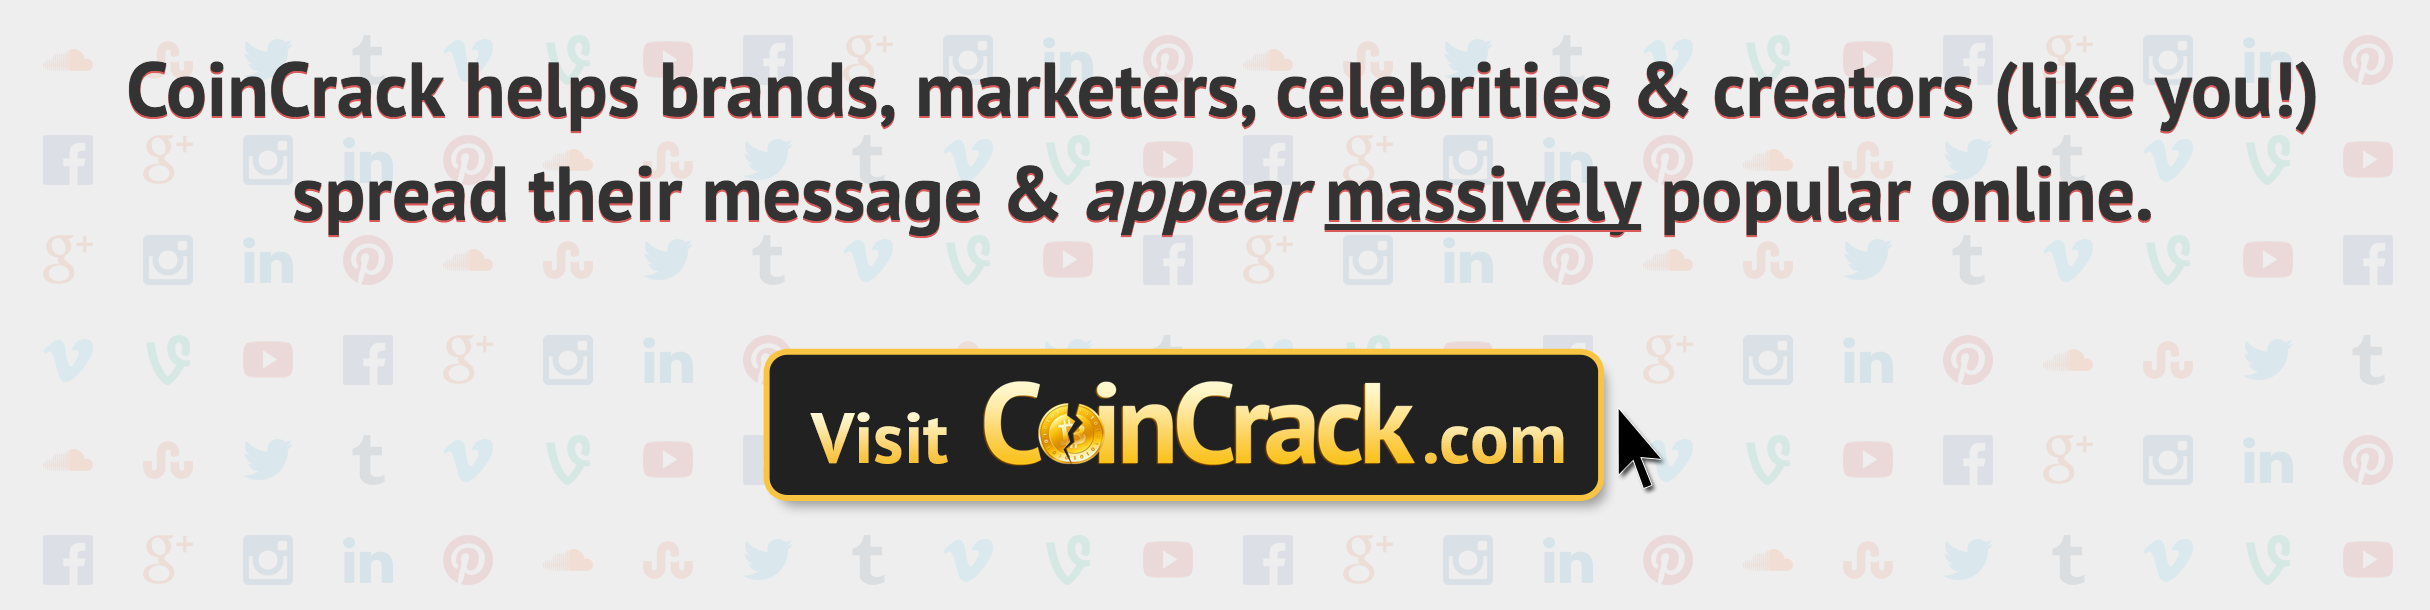 Visit CoinCrack.com